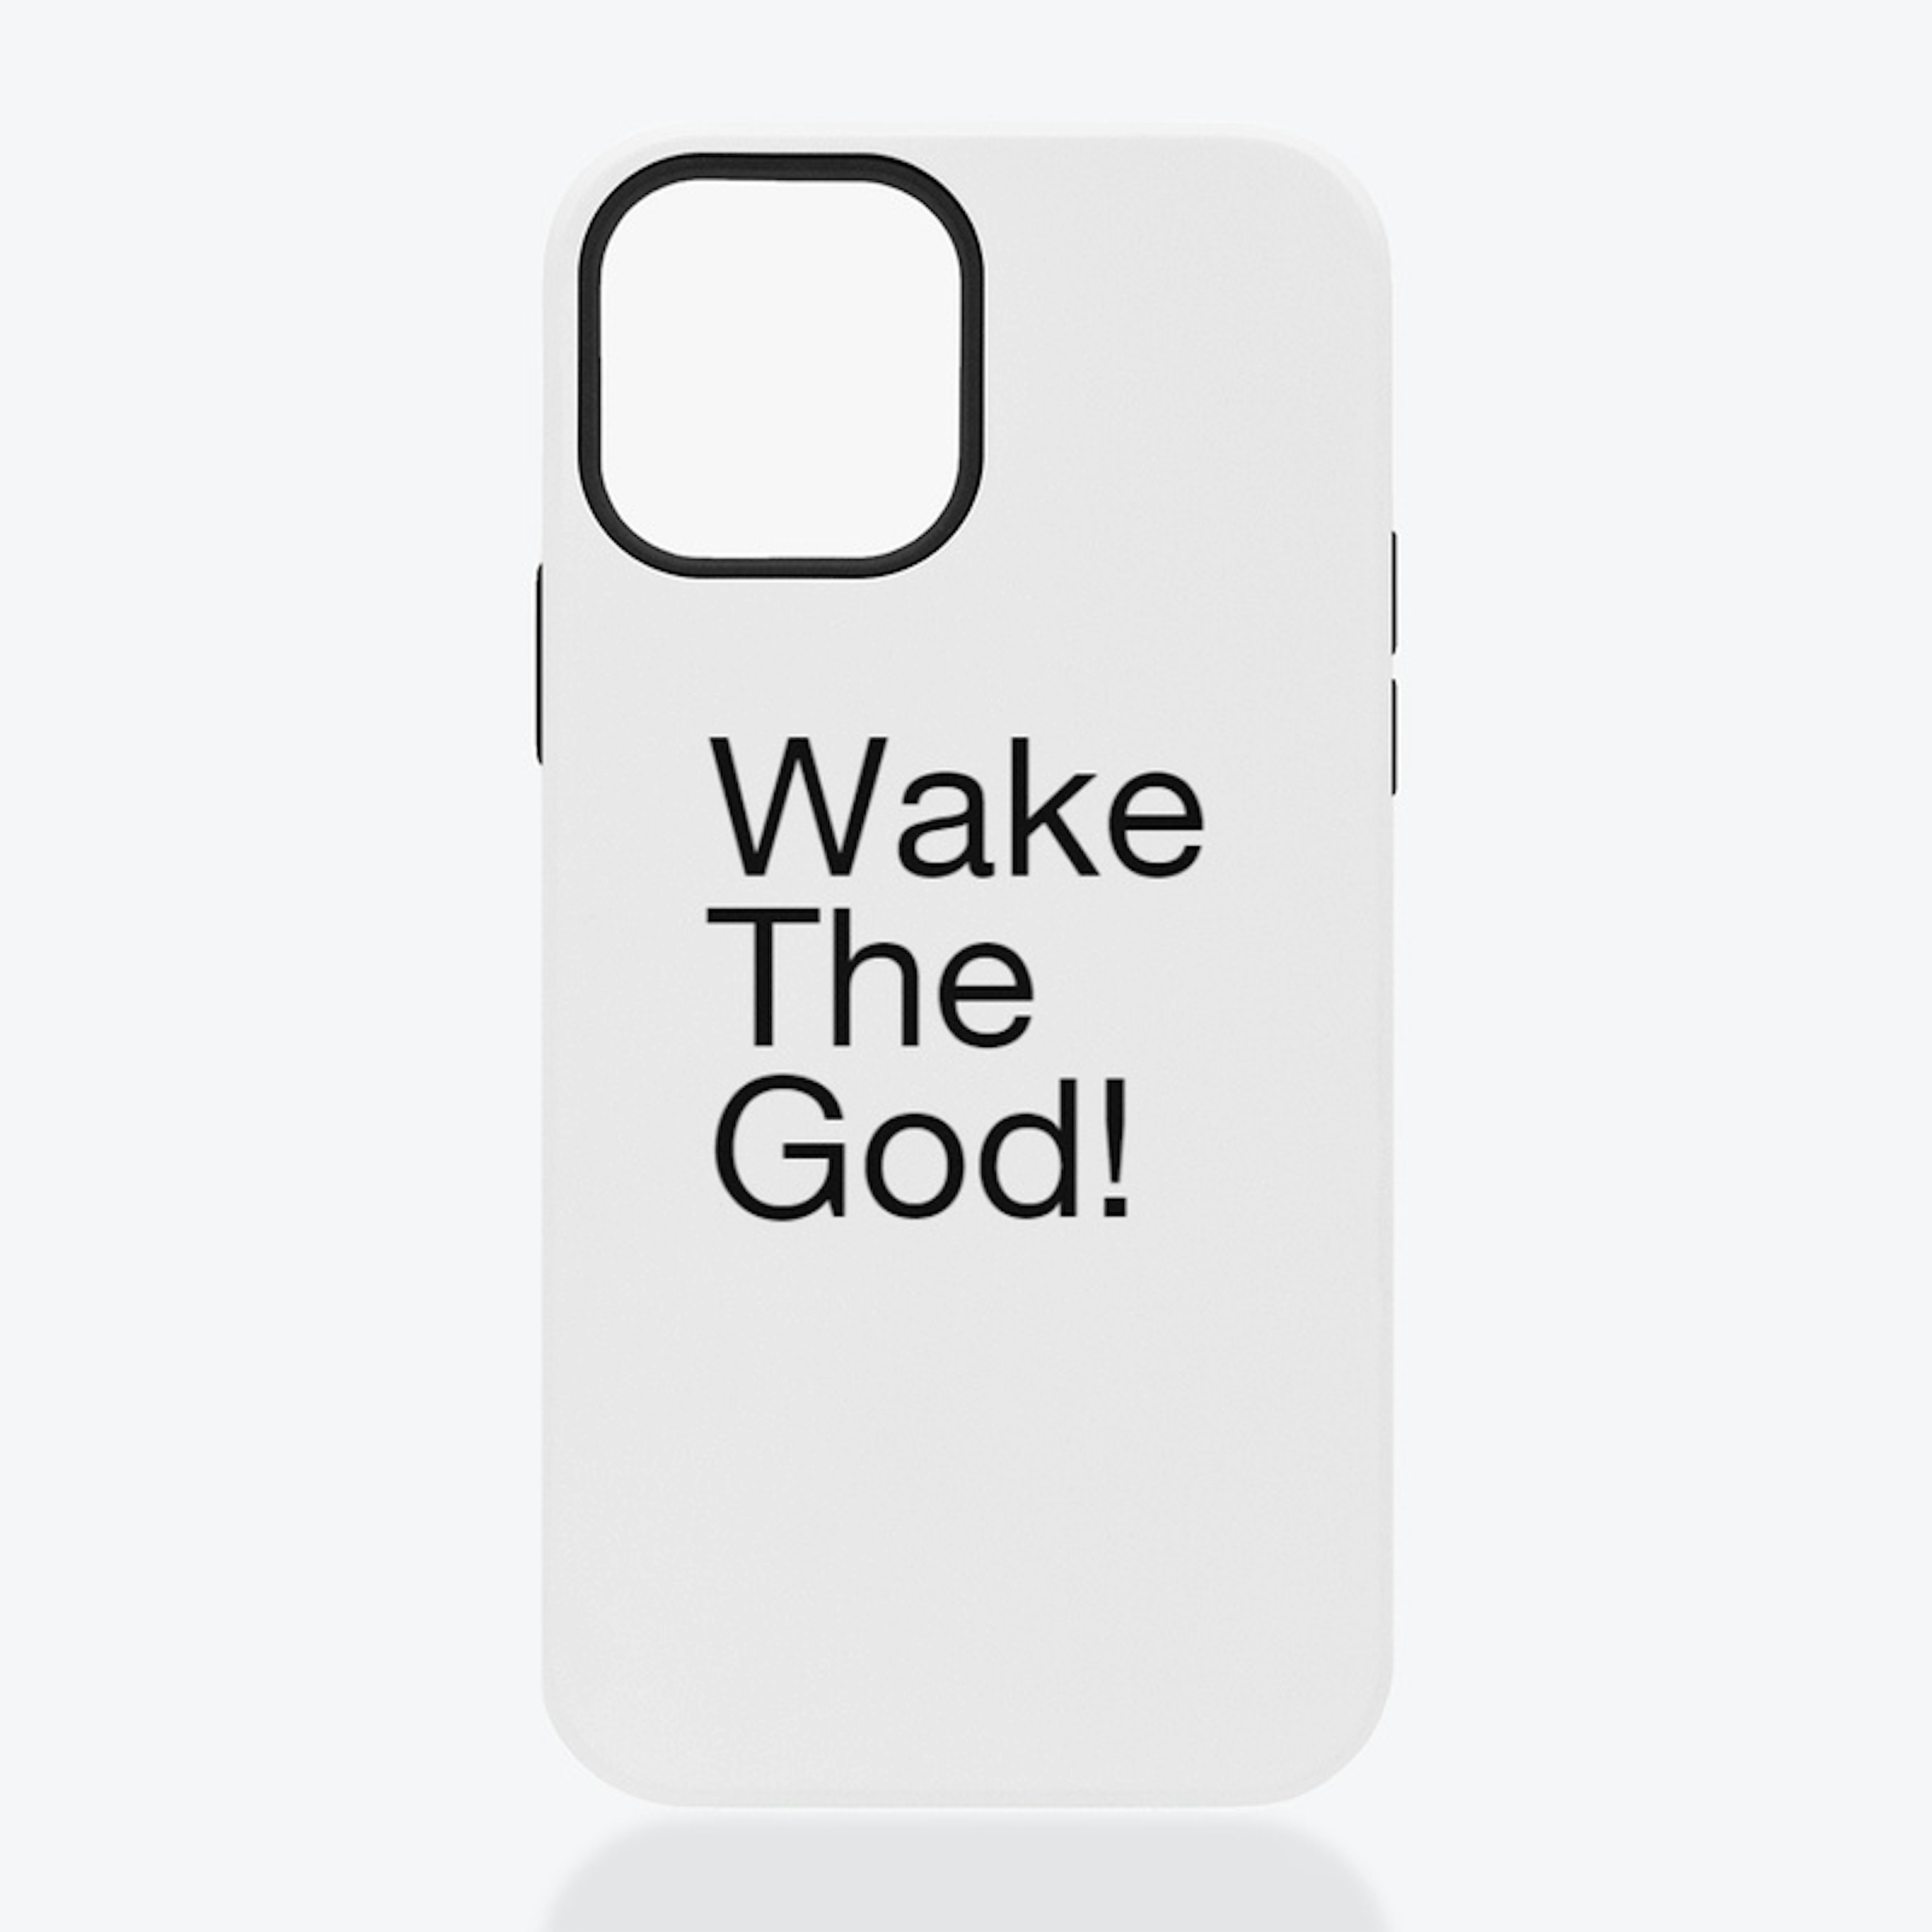 Wake The God!